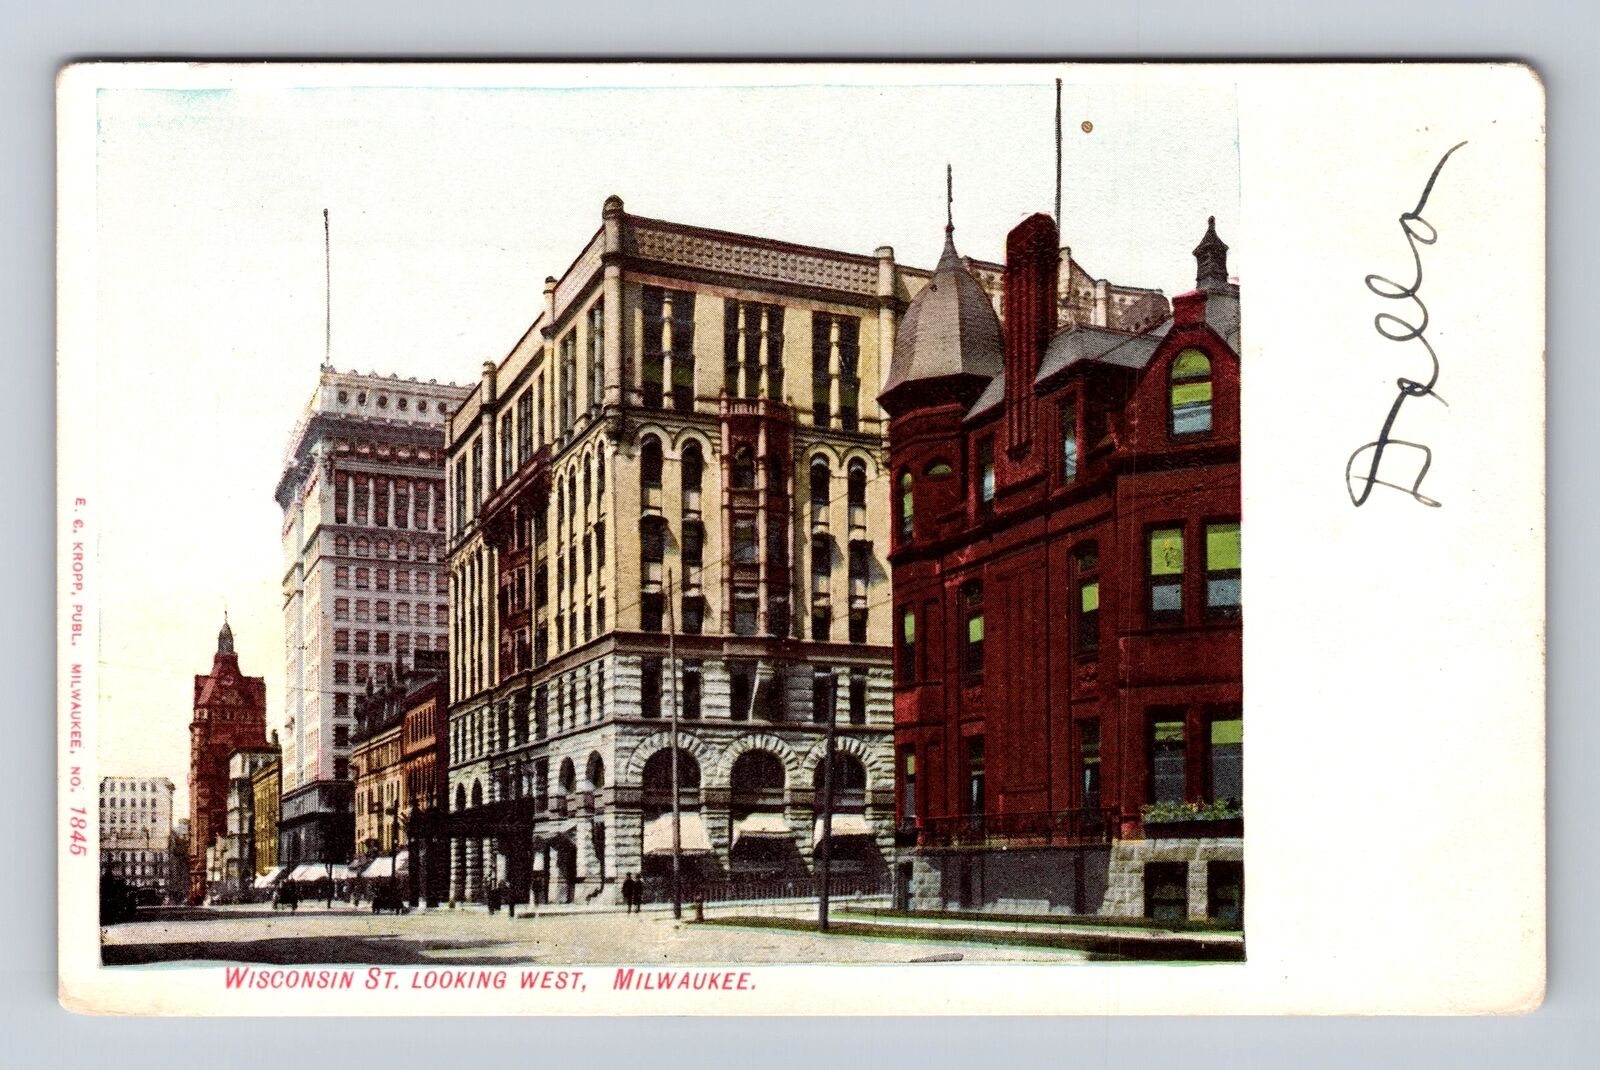 Milwaukee WI-Wisconsin, Wisconsin St Looking West, Antique, Vintage Postcard